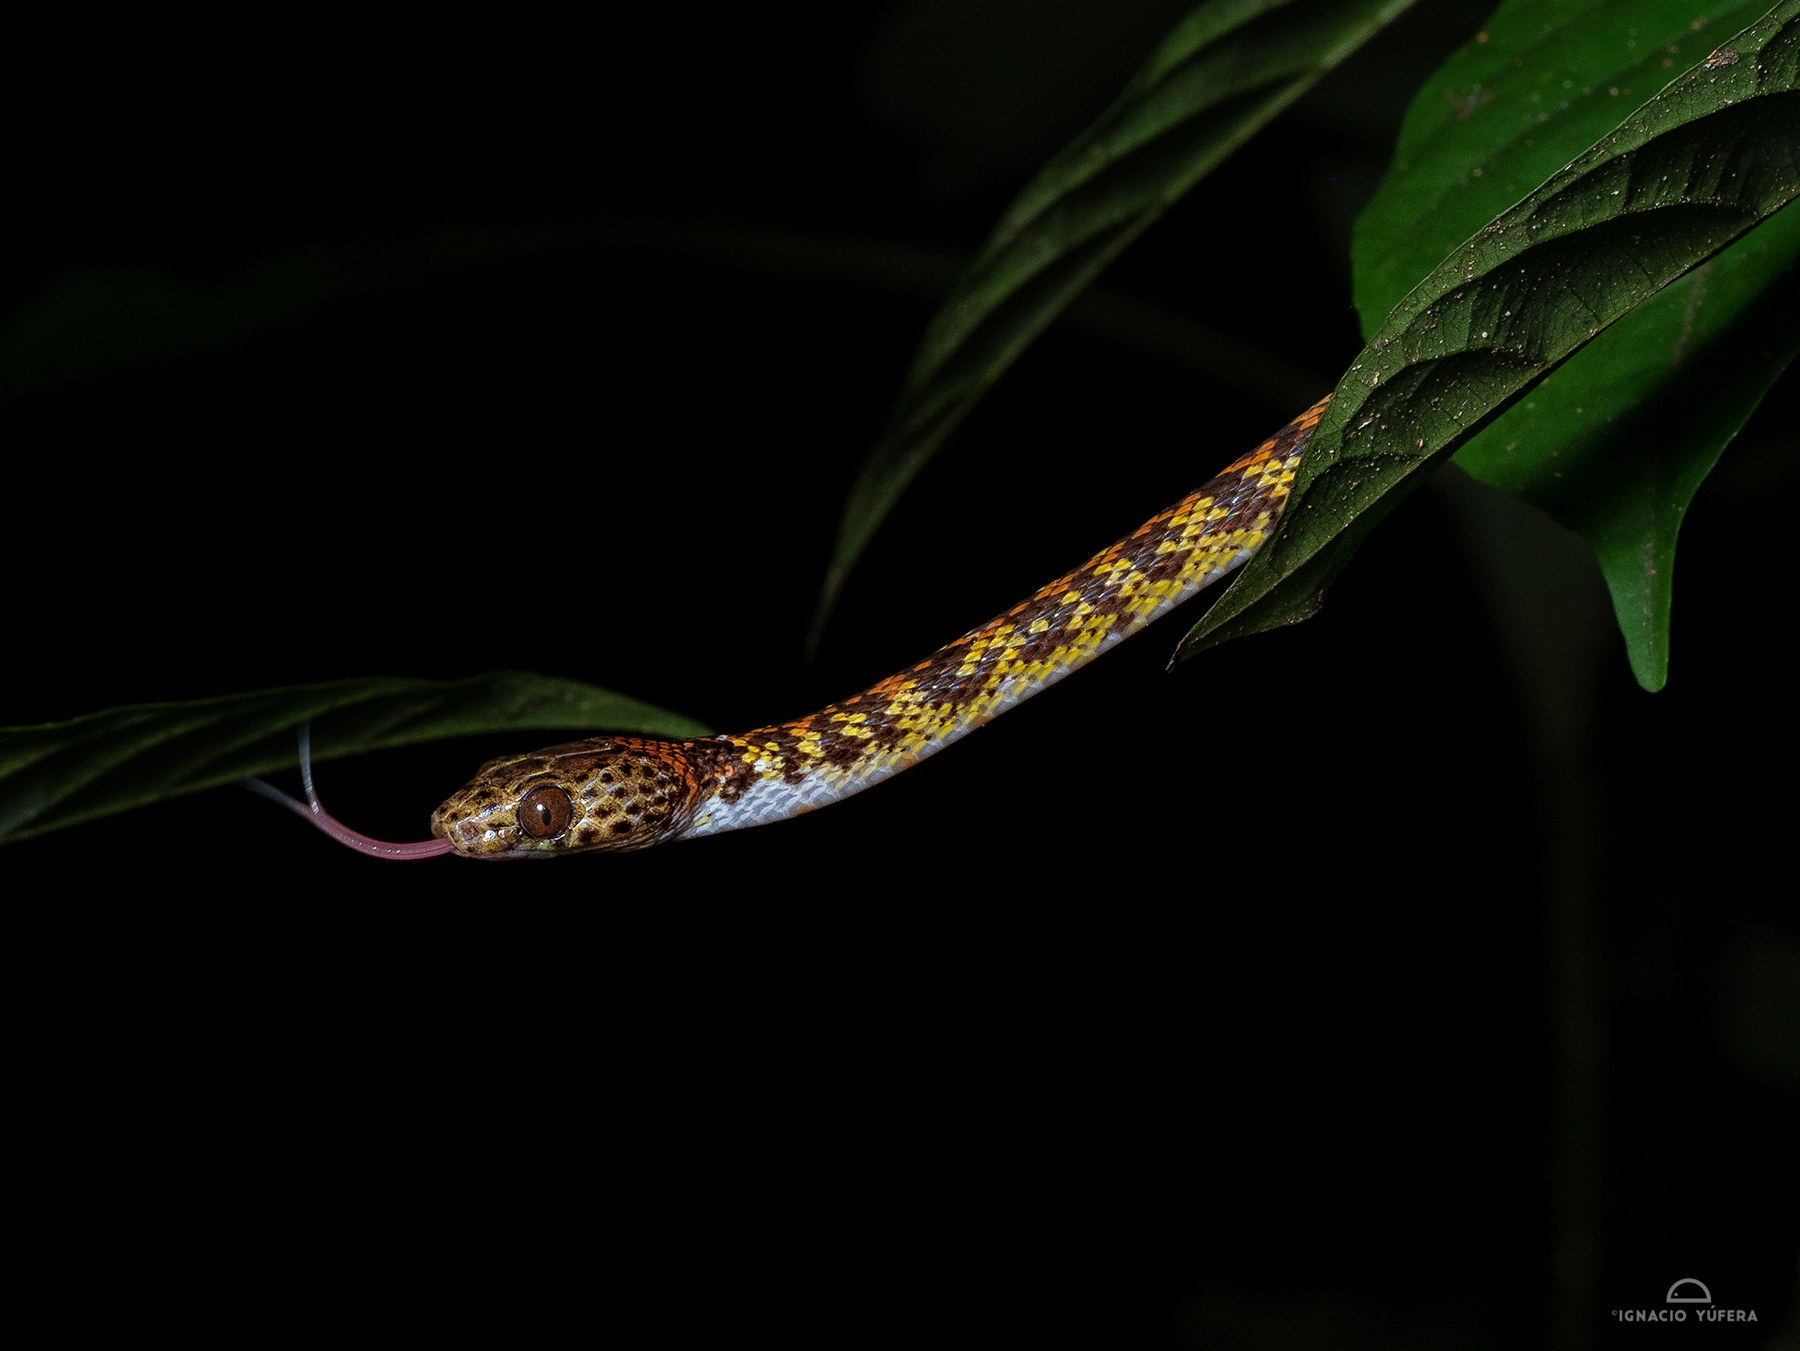 Checkerbelly snake (Siphlophis cervinus), Yasuní National Park, Ecuador